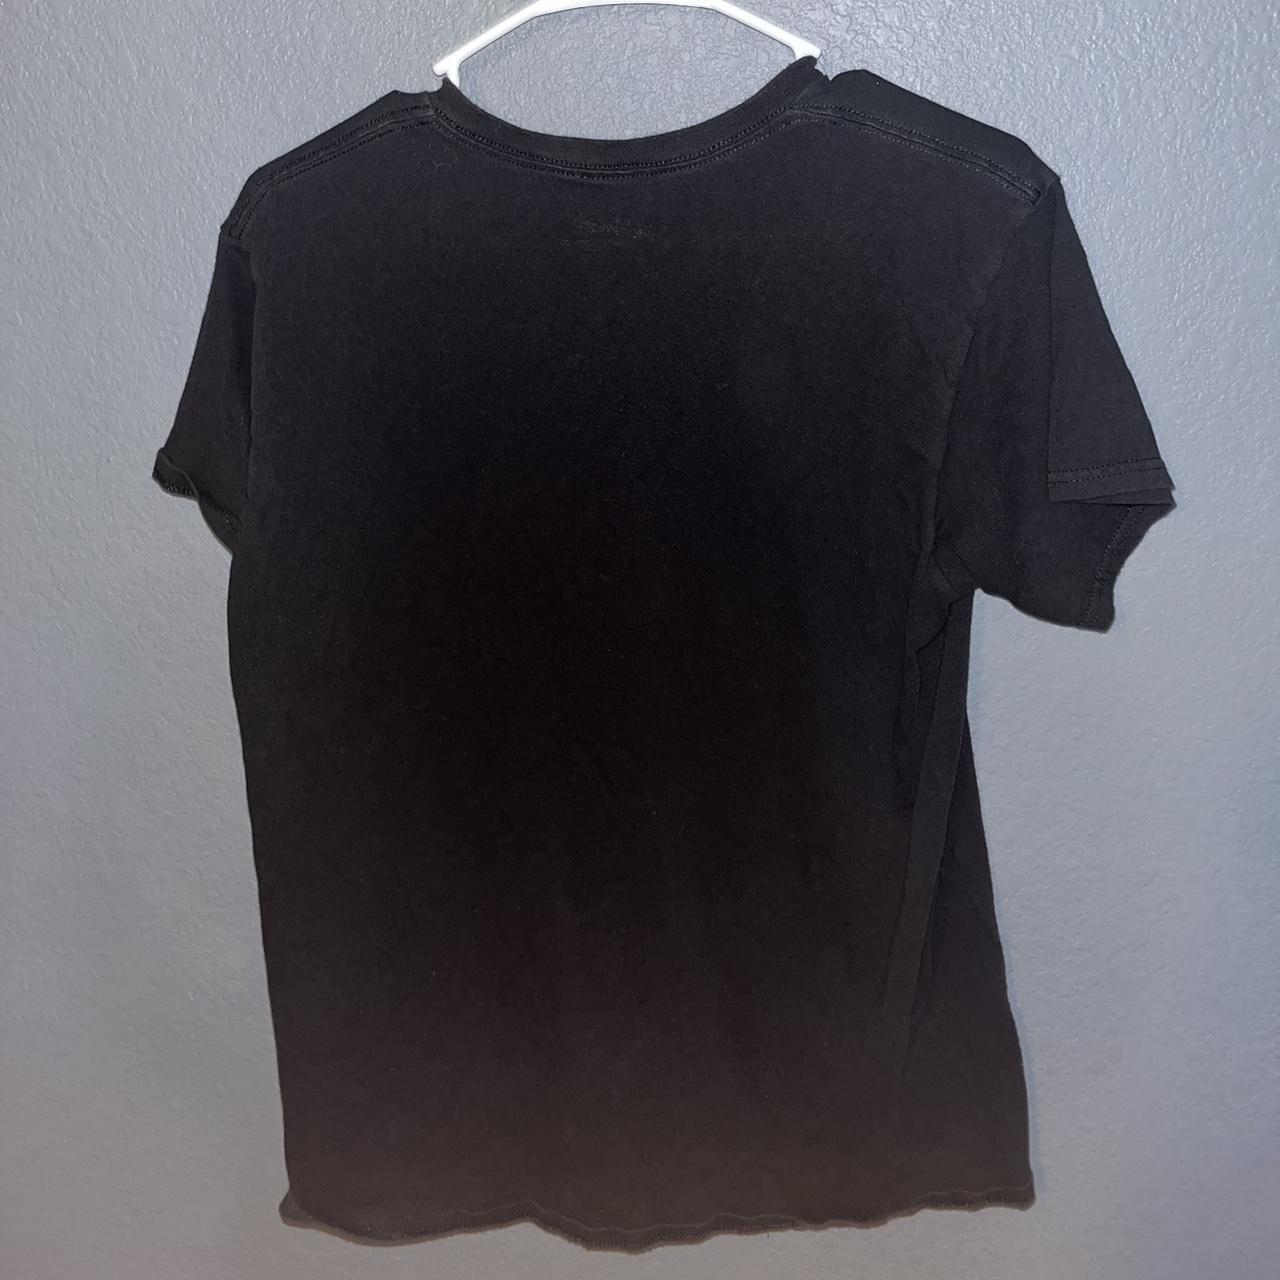 Hot Topic Men's Black T-shirt (2)